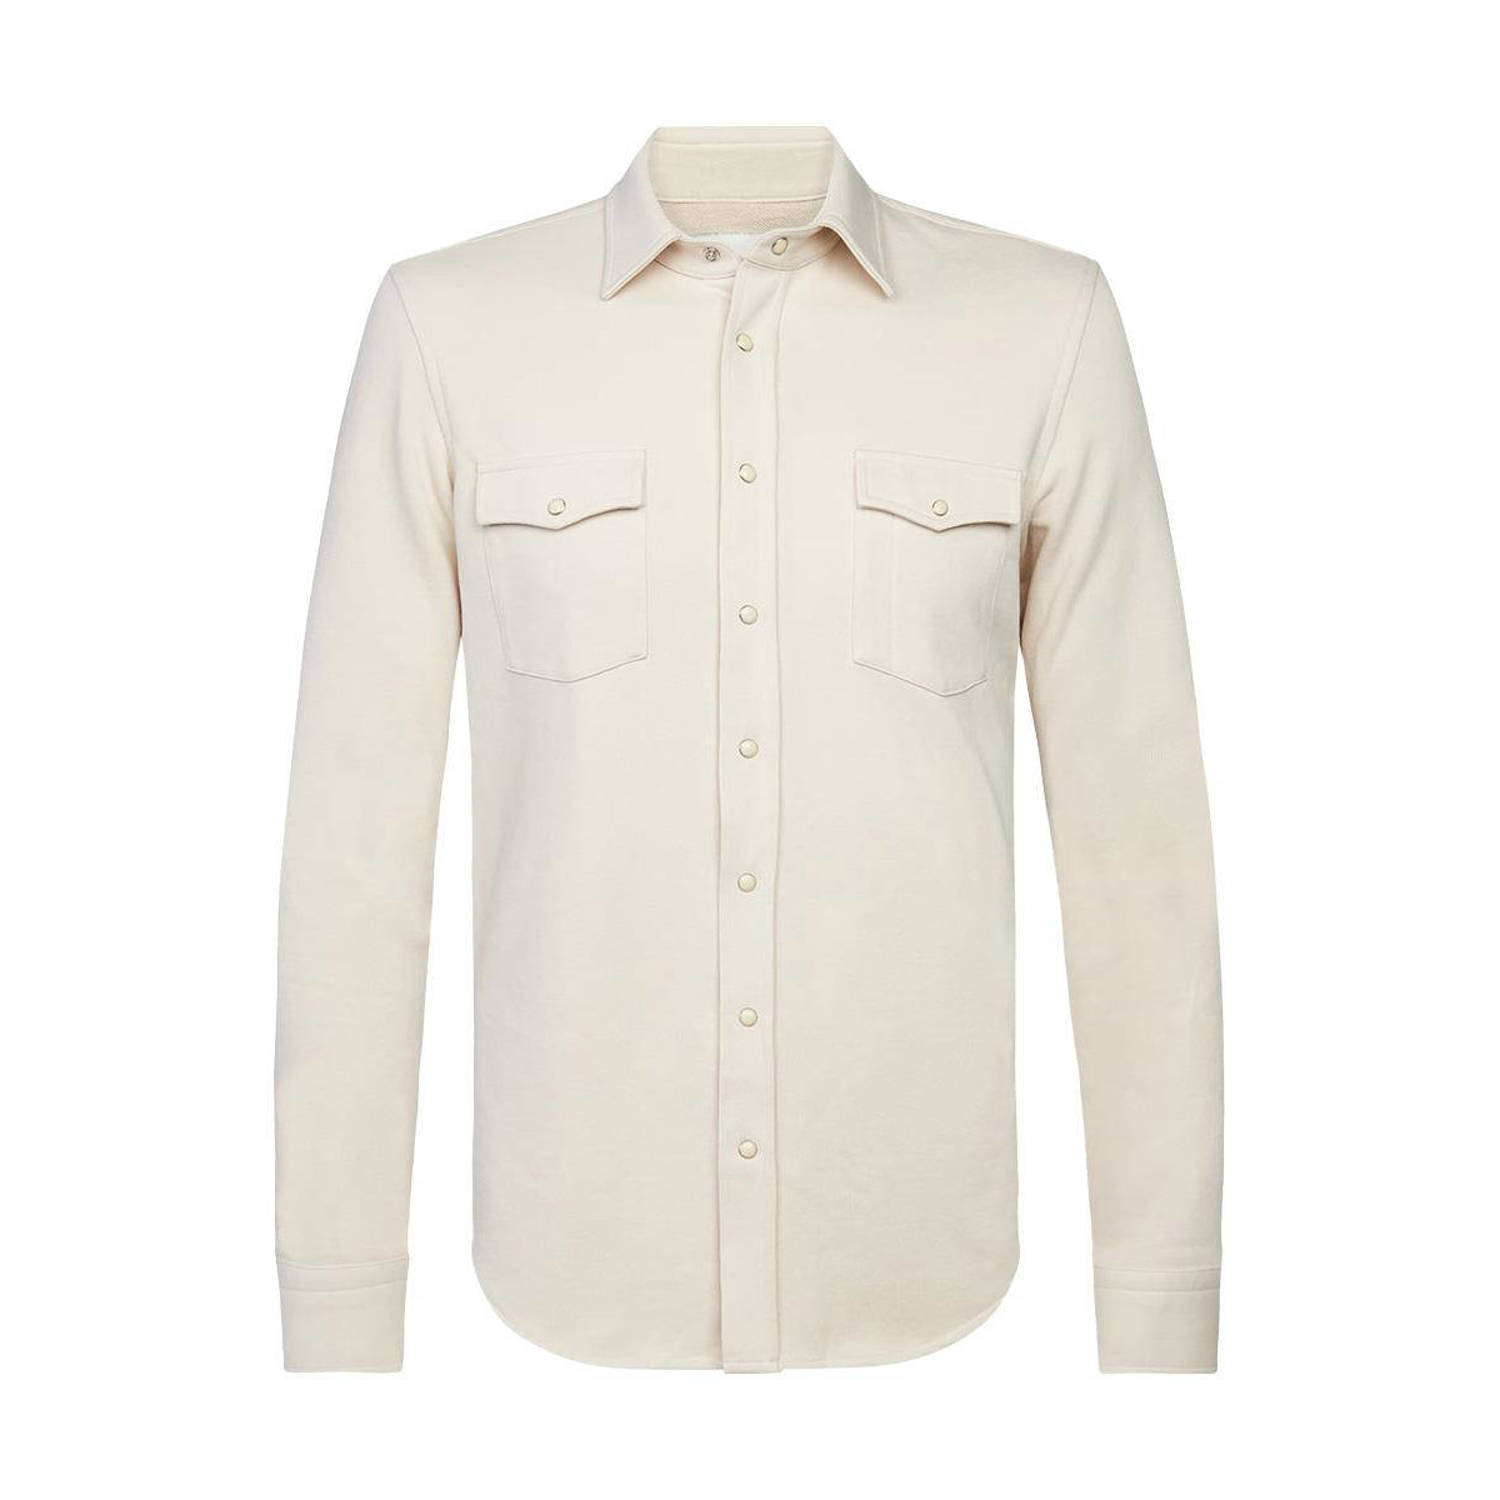 Profuomo regular fit overshirt WESTERN light beige